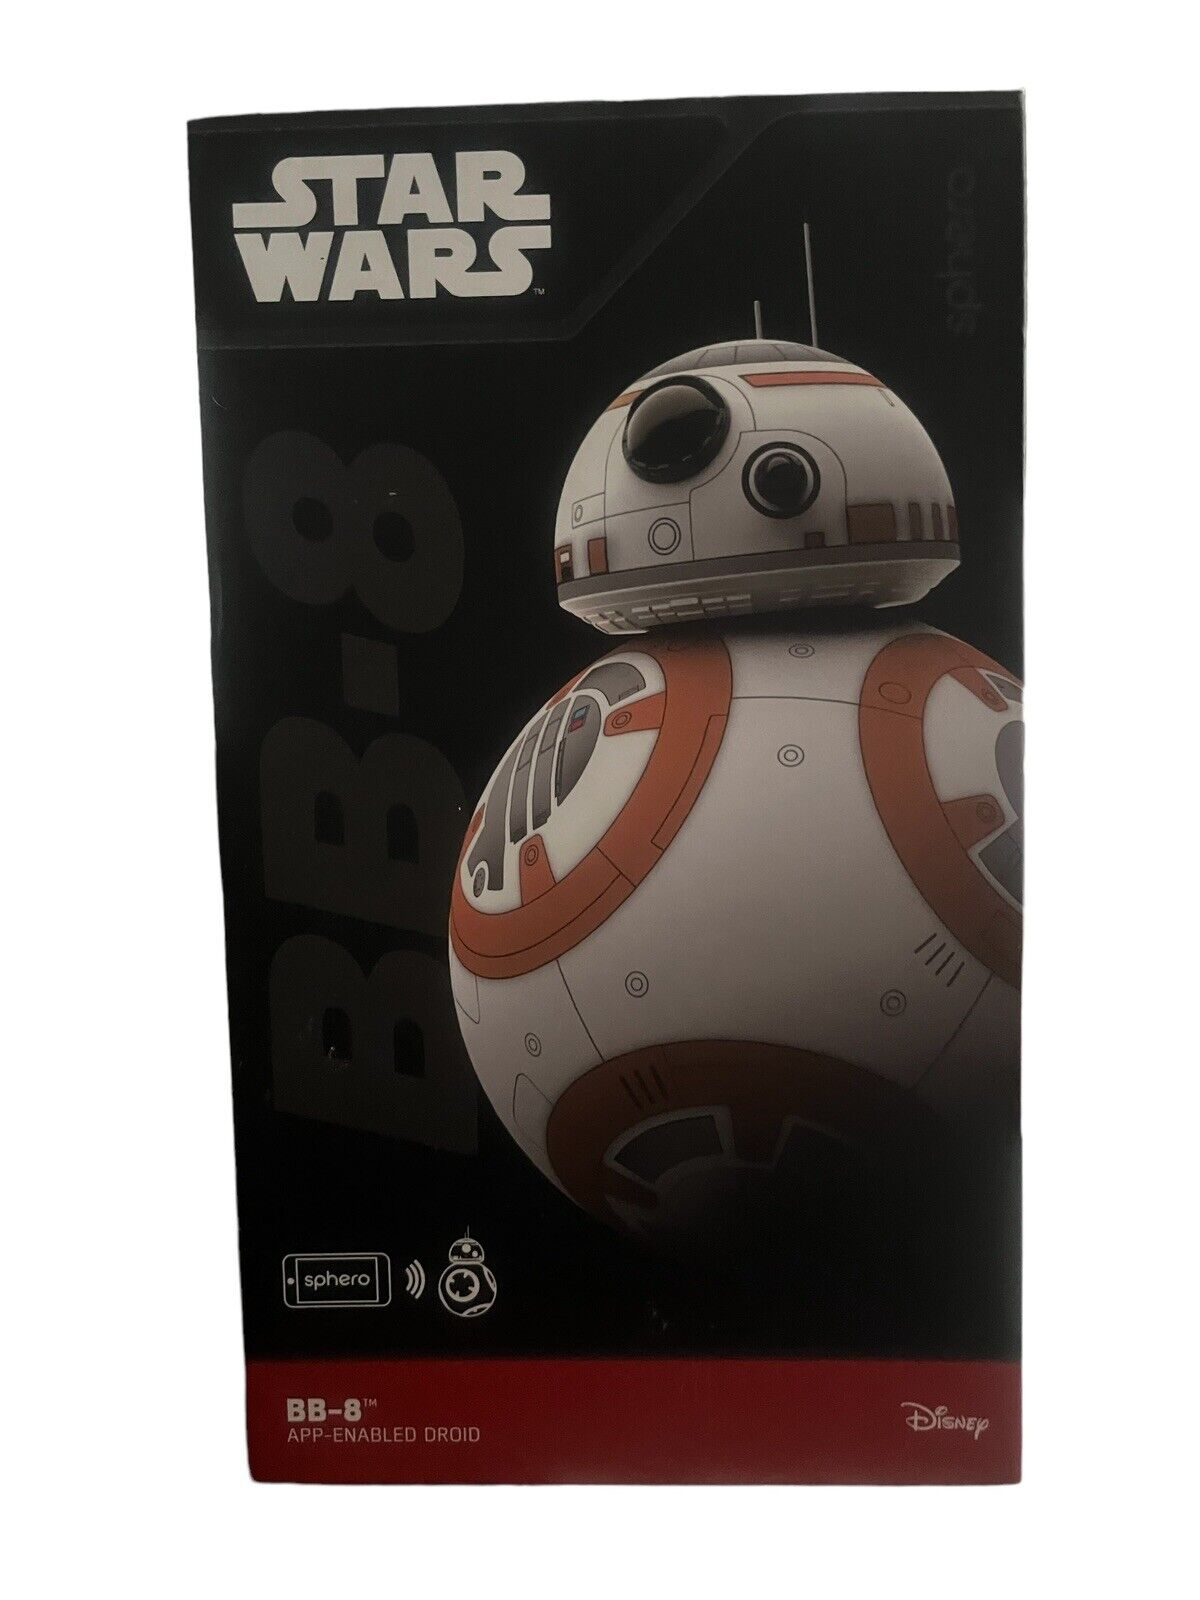 Star Wars, BB-8 App Enabled Droid R001 , Sphero Disney Toy NEW In open box